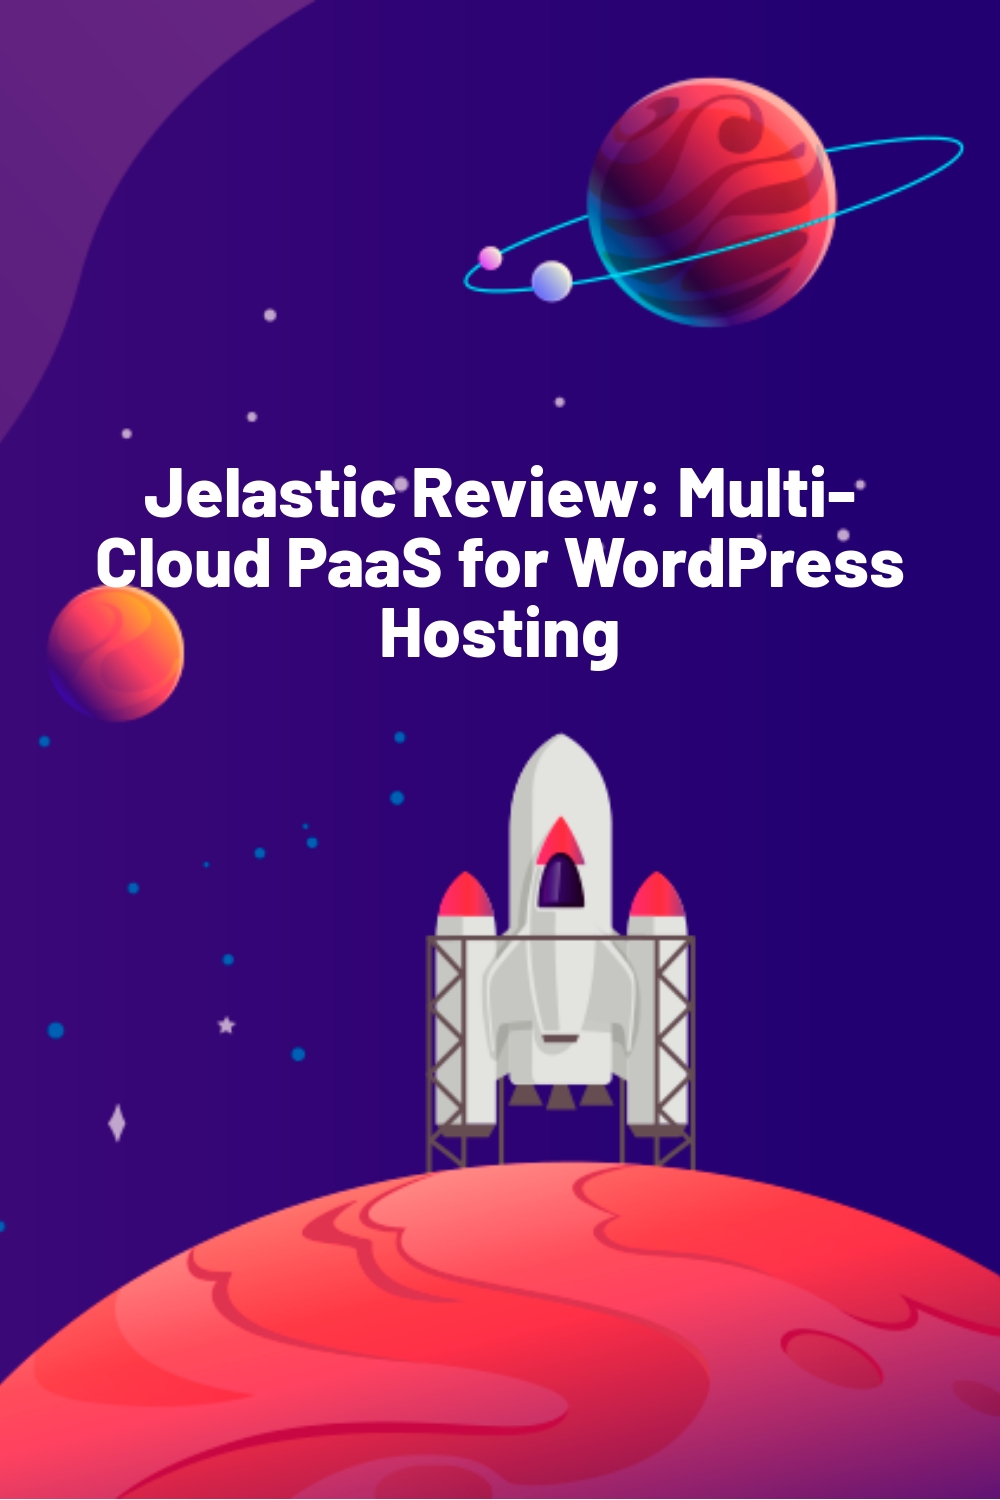 Jelastic Review: Multi-Cloud PaaS for WordPress Hosting